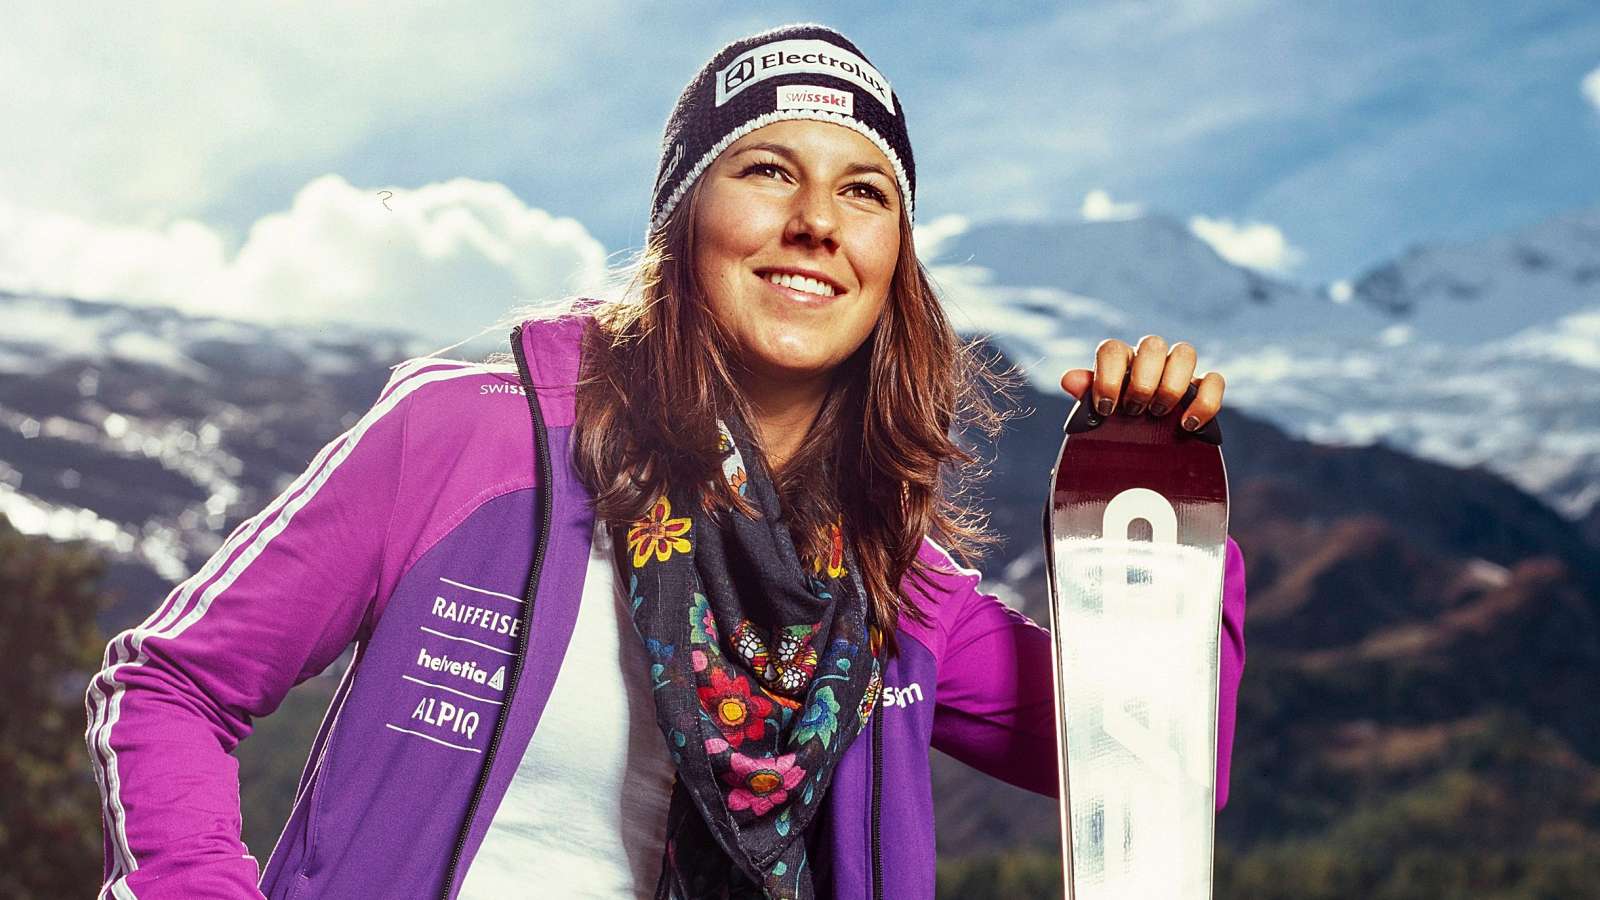 Wendy Holdener â€“ FIS Alpine Skiing World Cup 2016 in St. Moritz